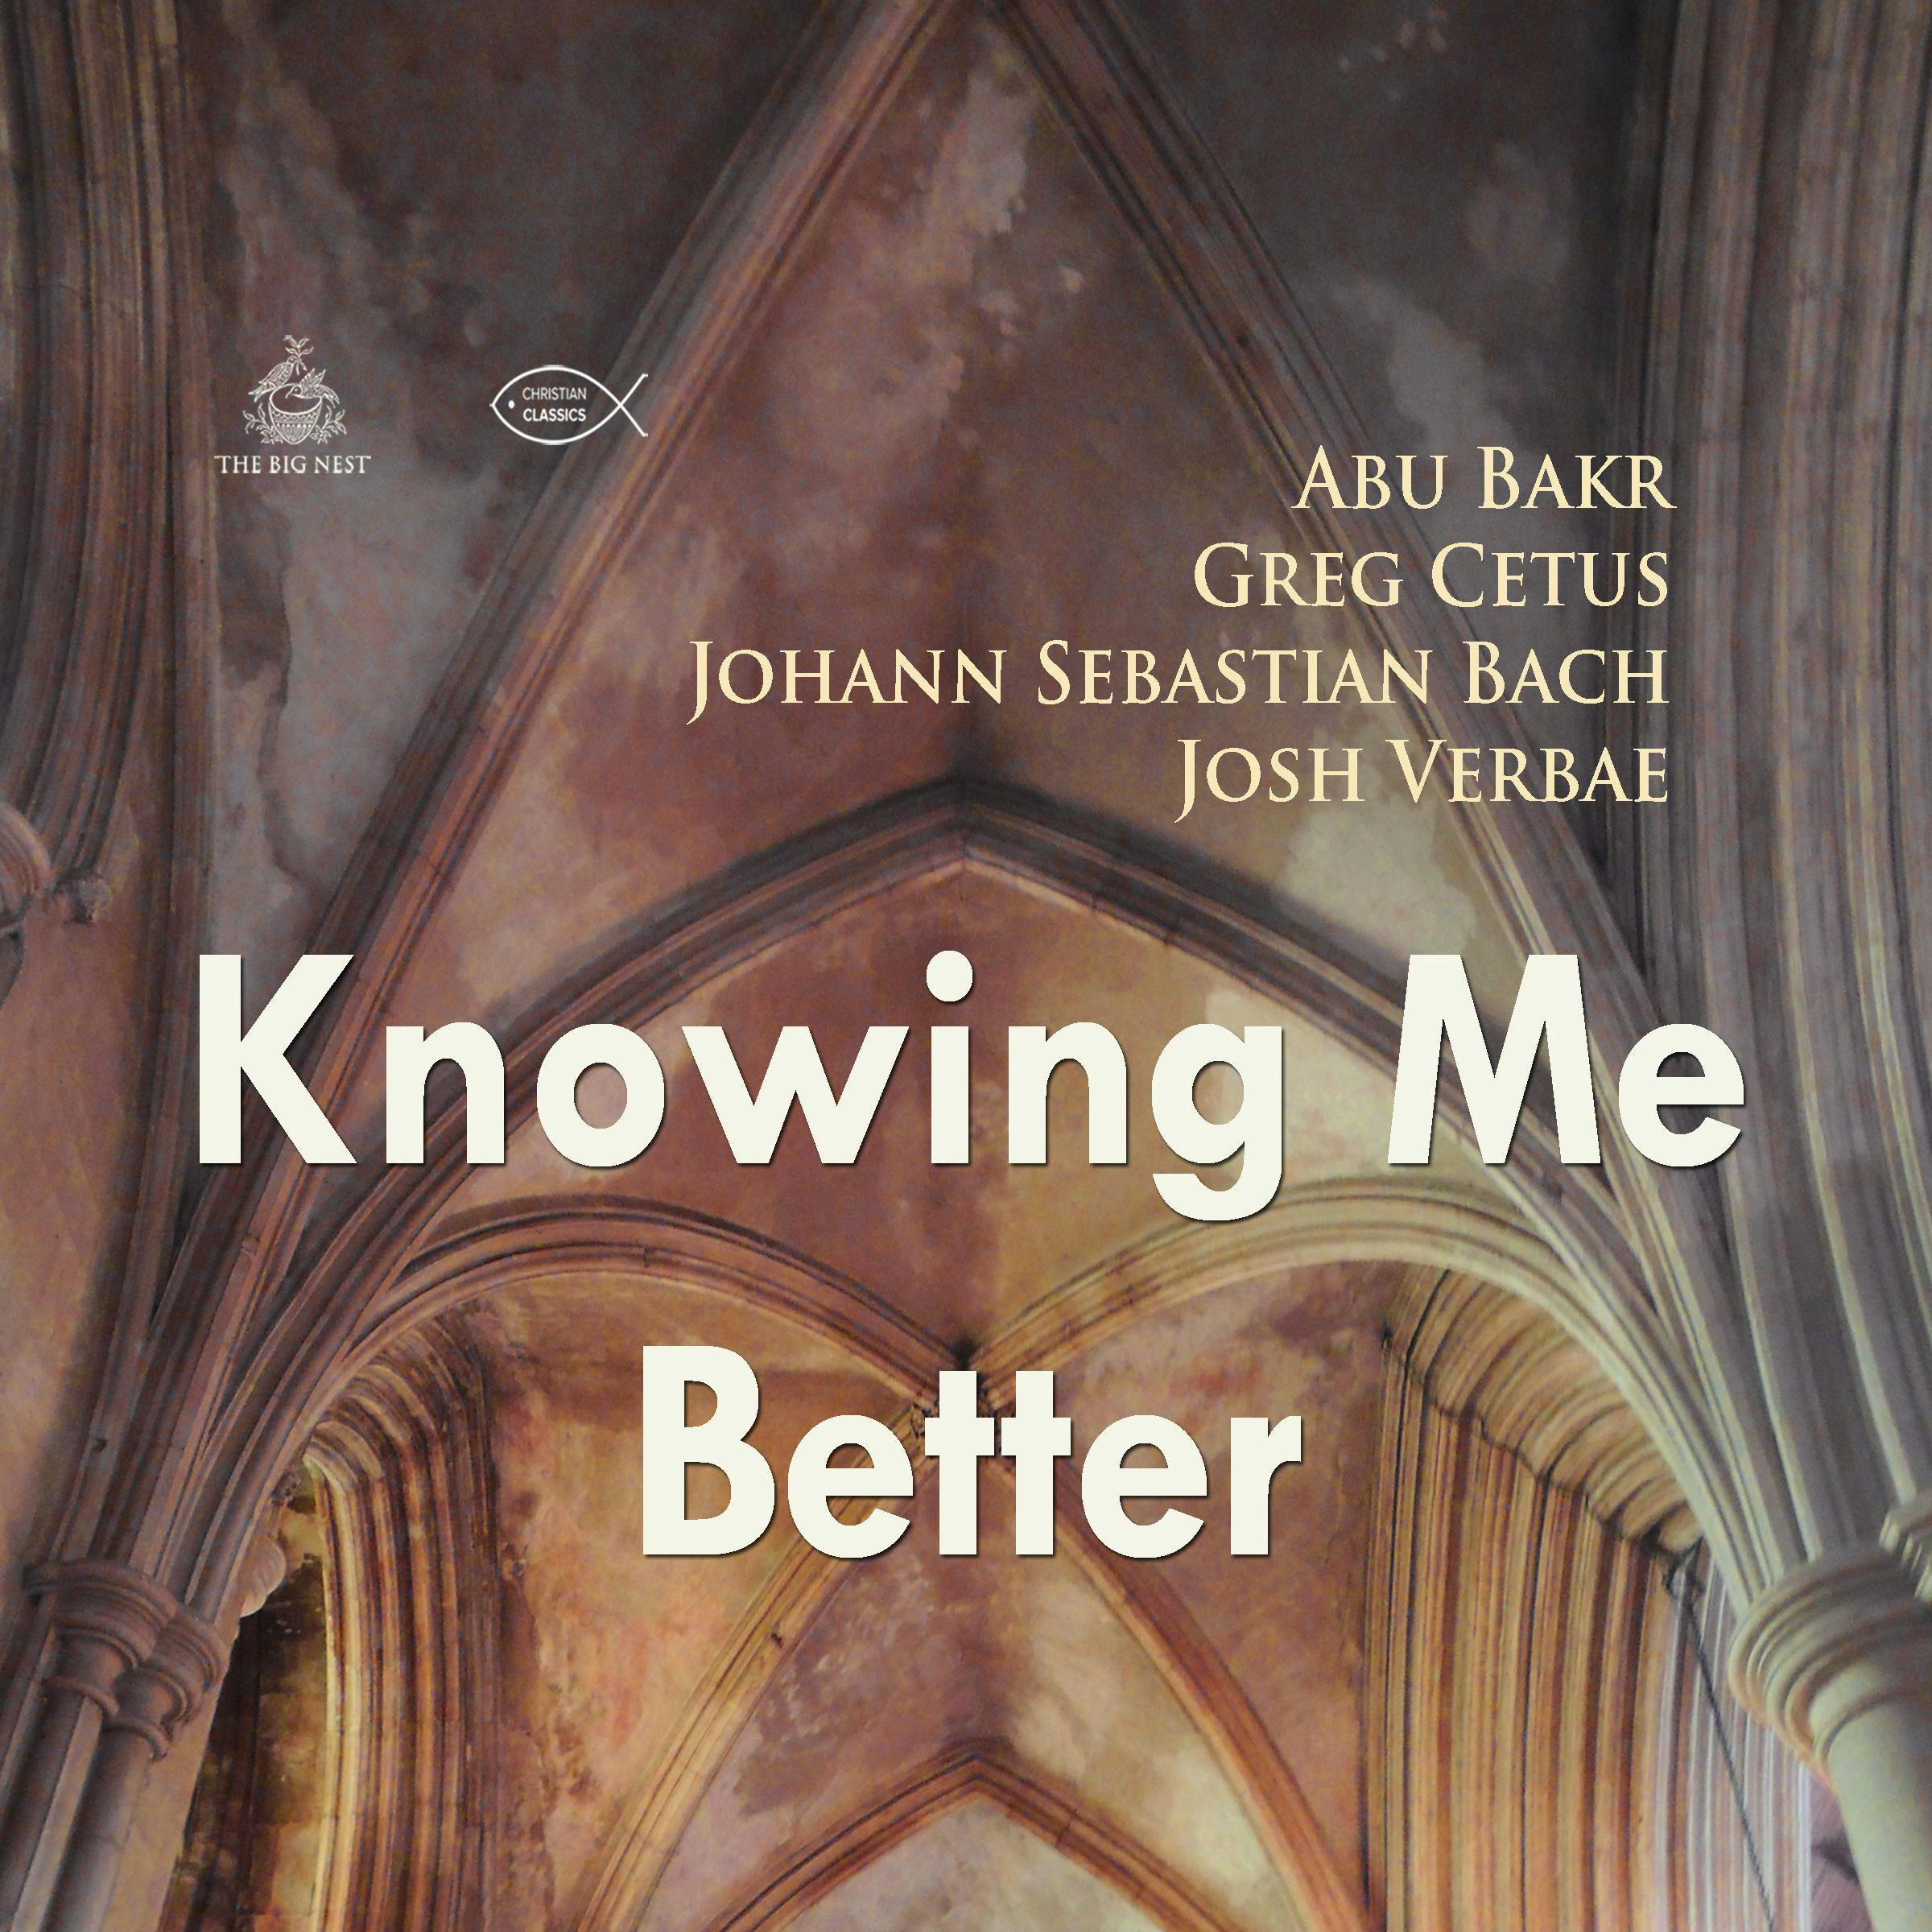 Knowing Me Better - Johann Sebastian Bach, Abu Bakr